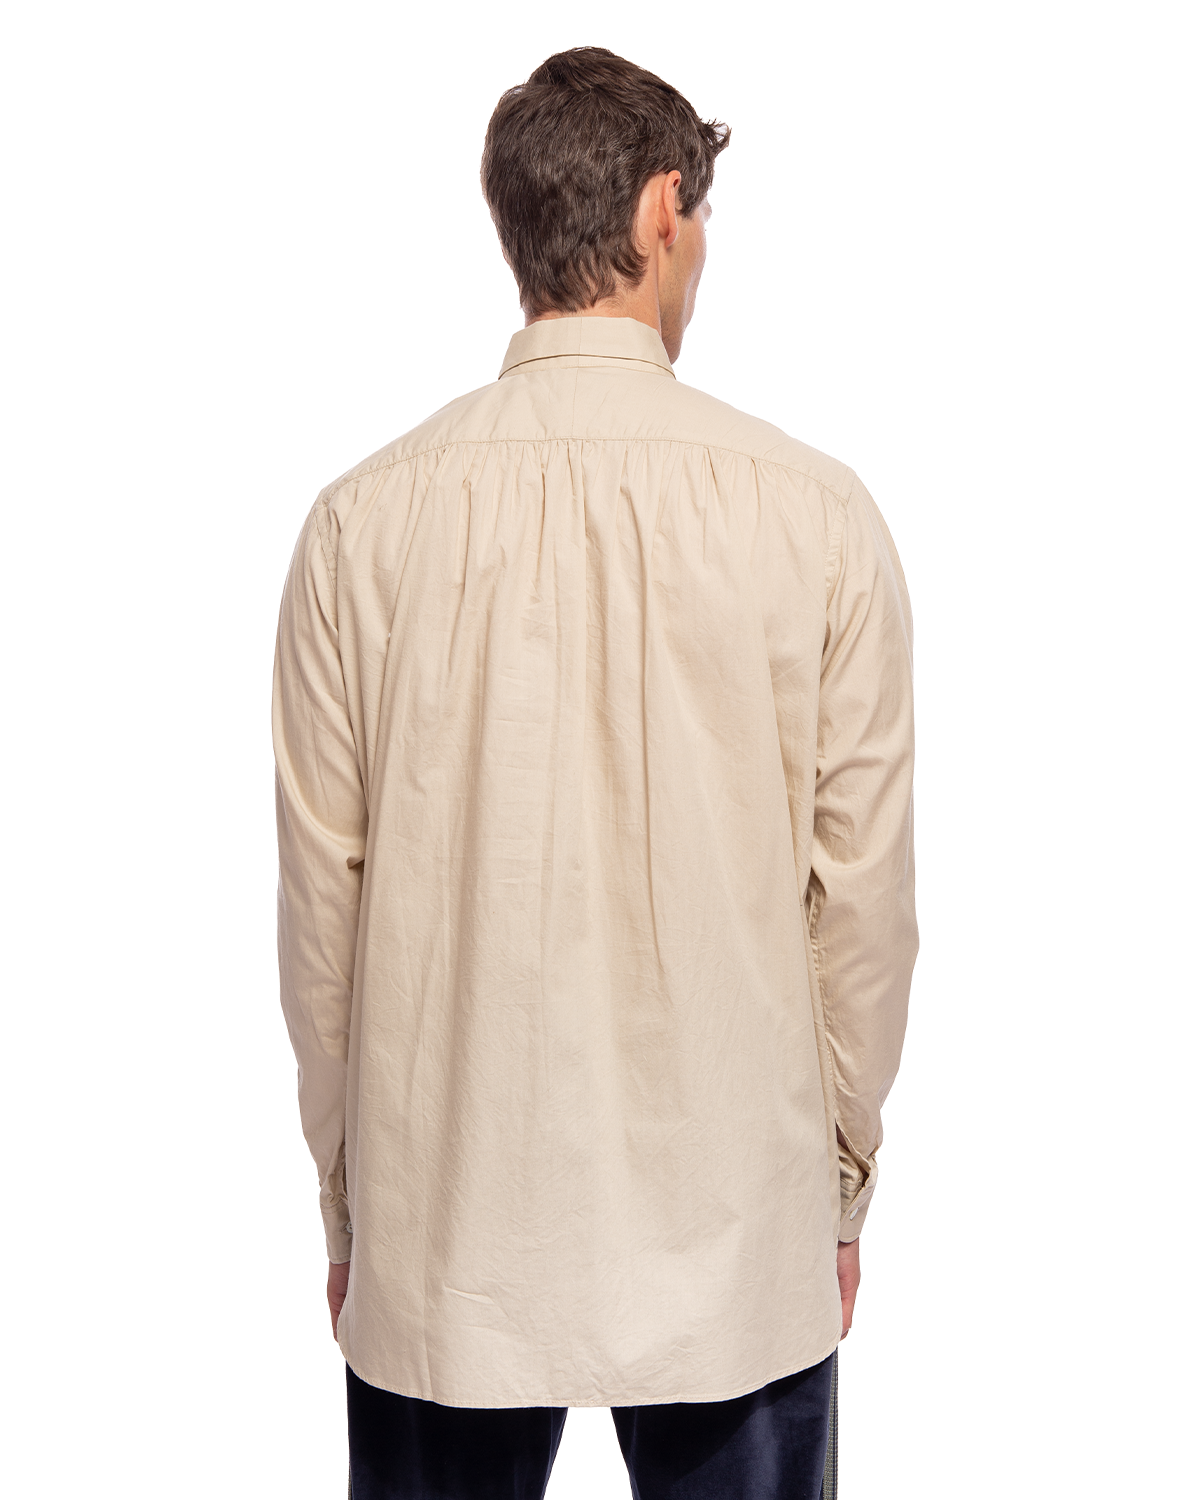 Ascot Collar Shirt Cotton Broadcloth